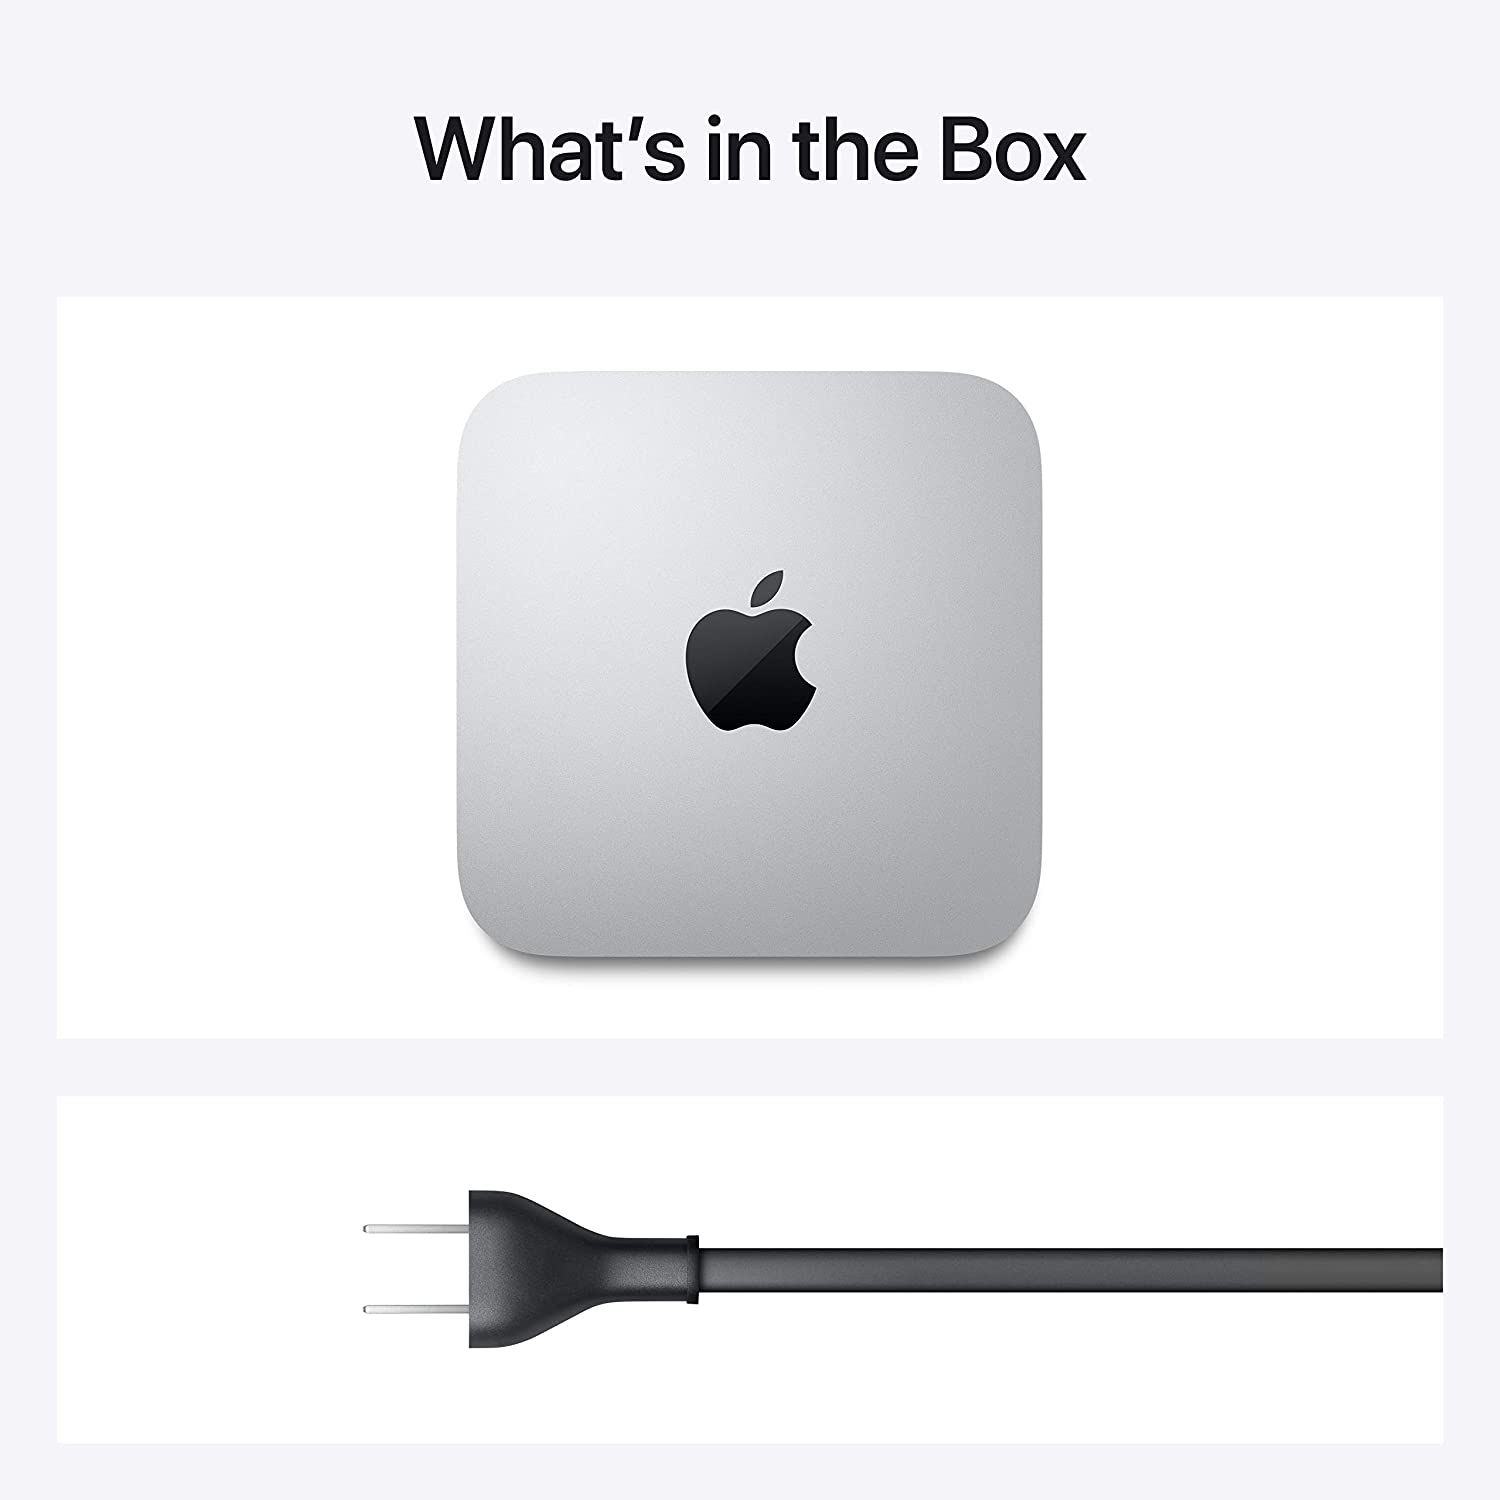 Apple Mac Mini in the box